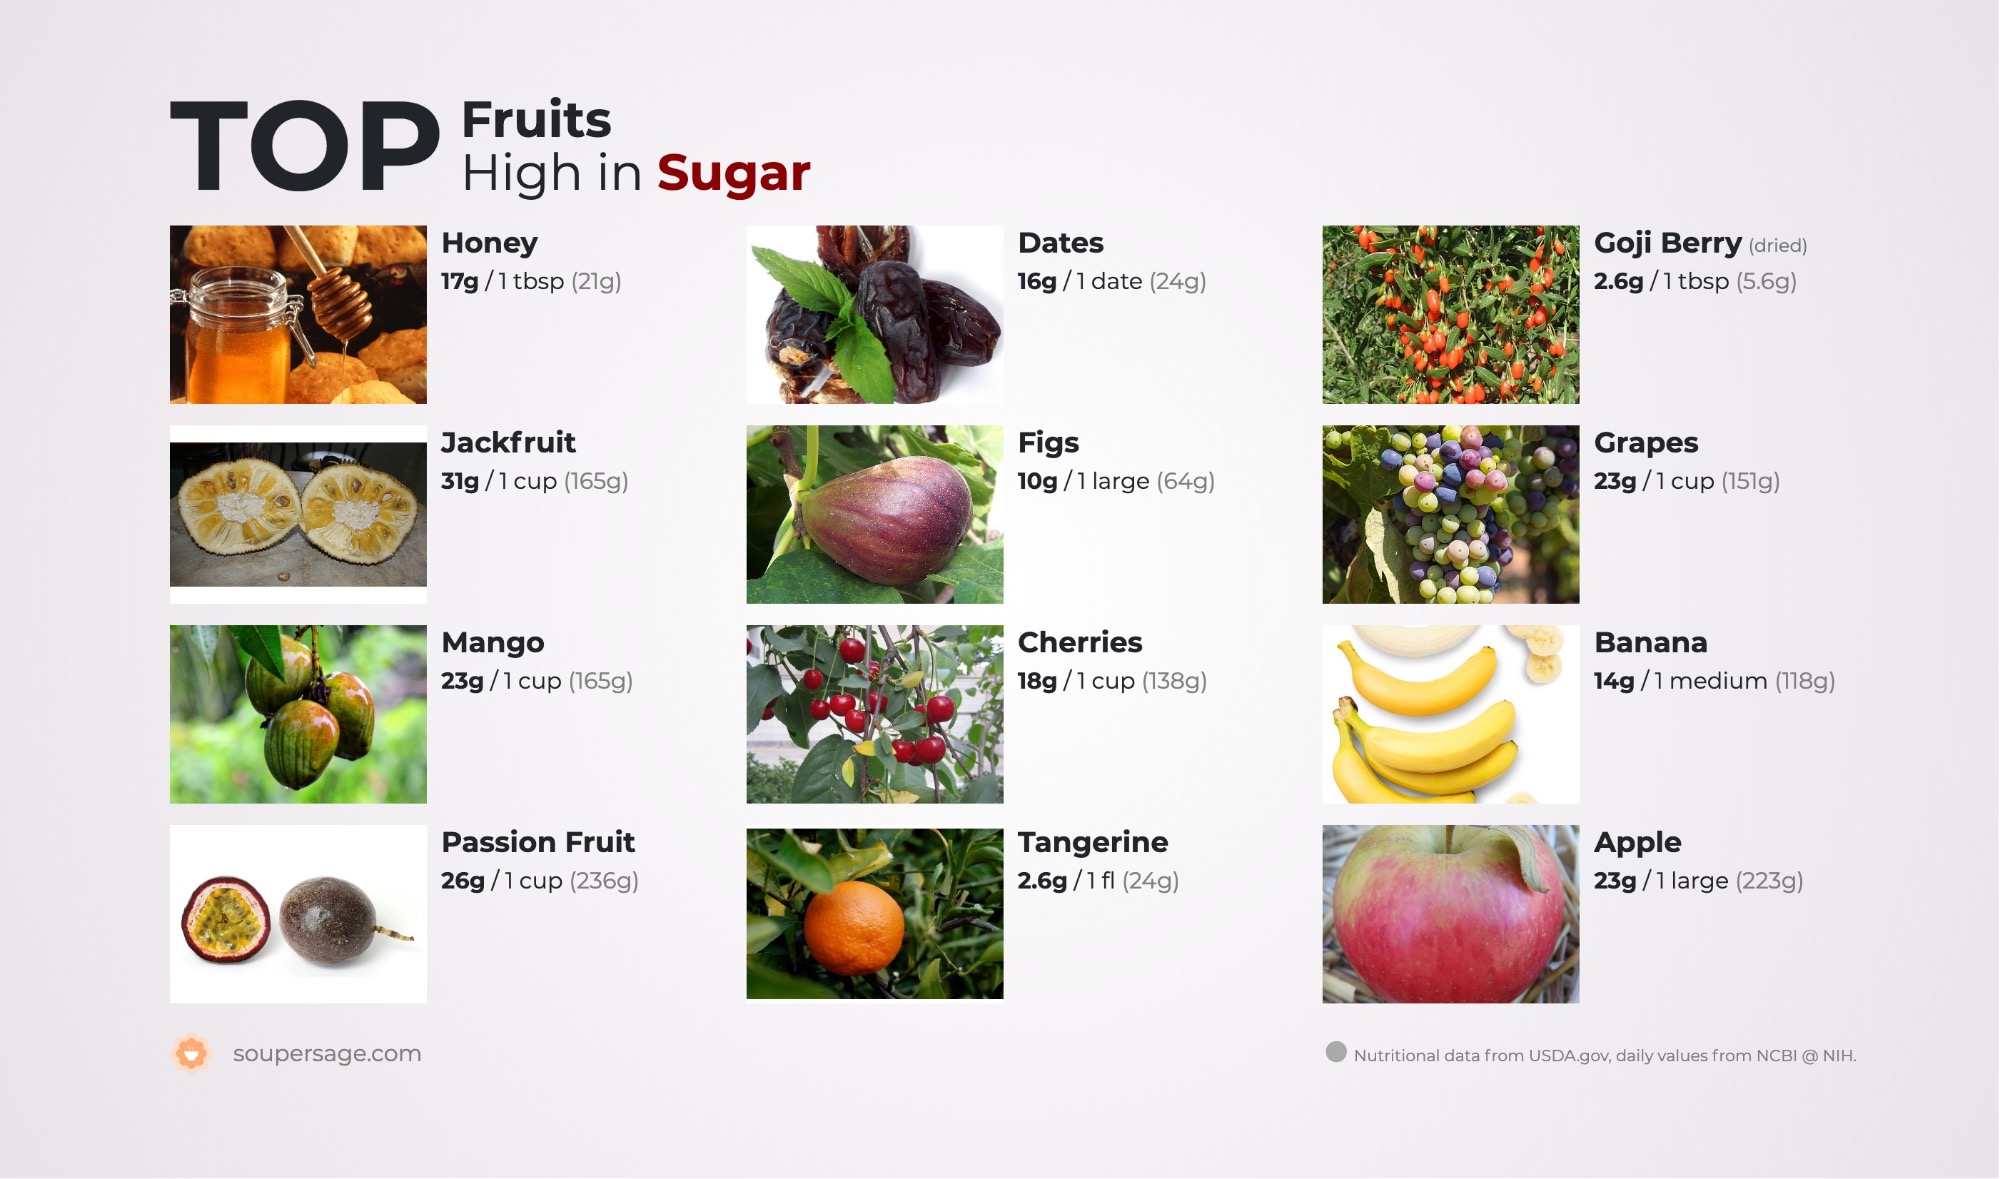 Top Fruits High in Sugar